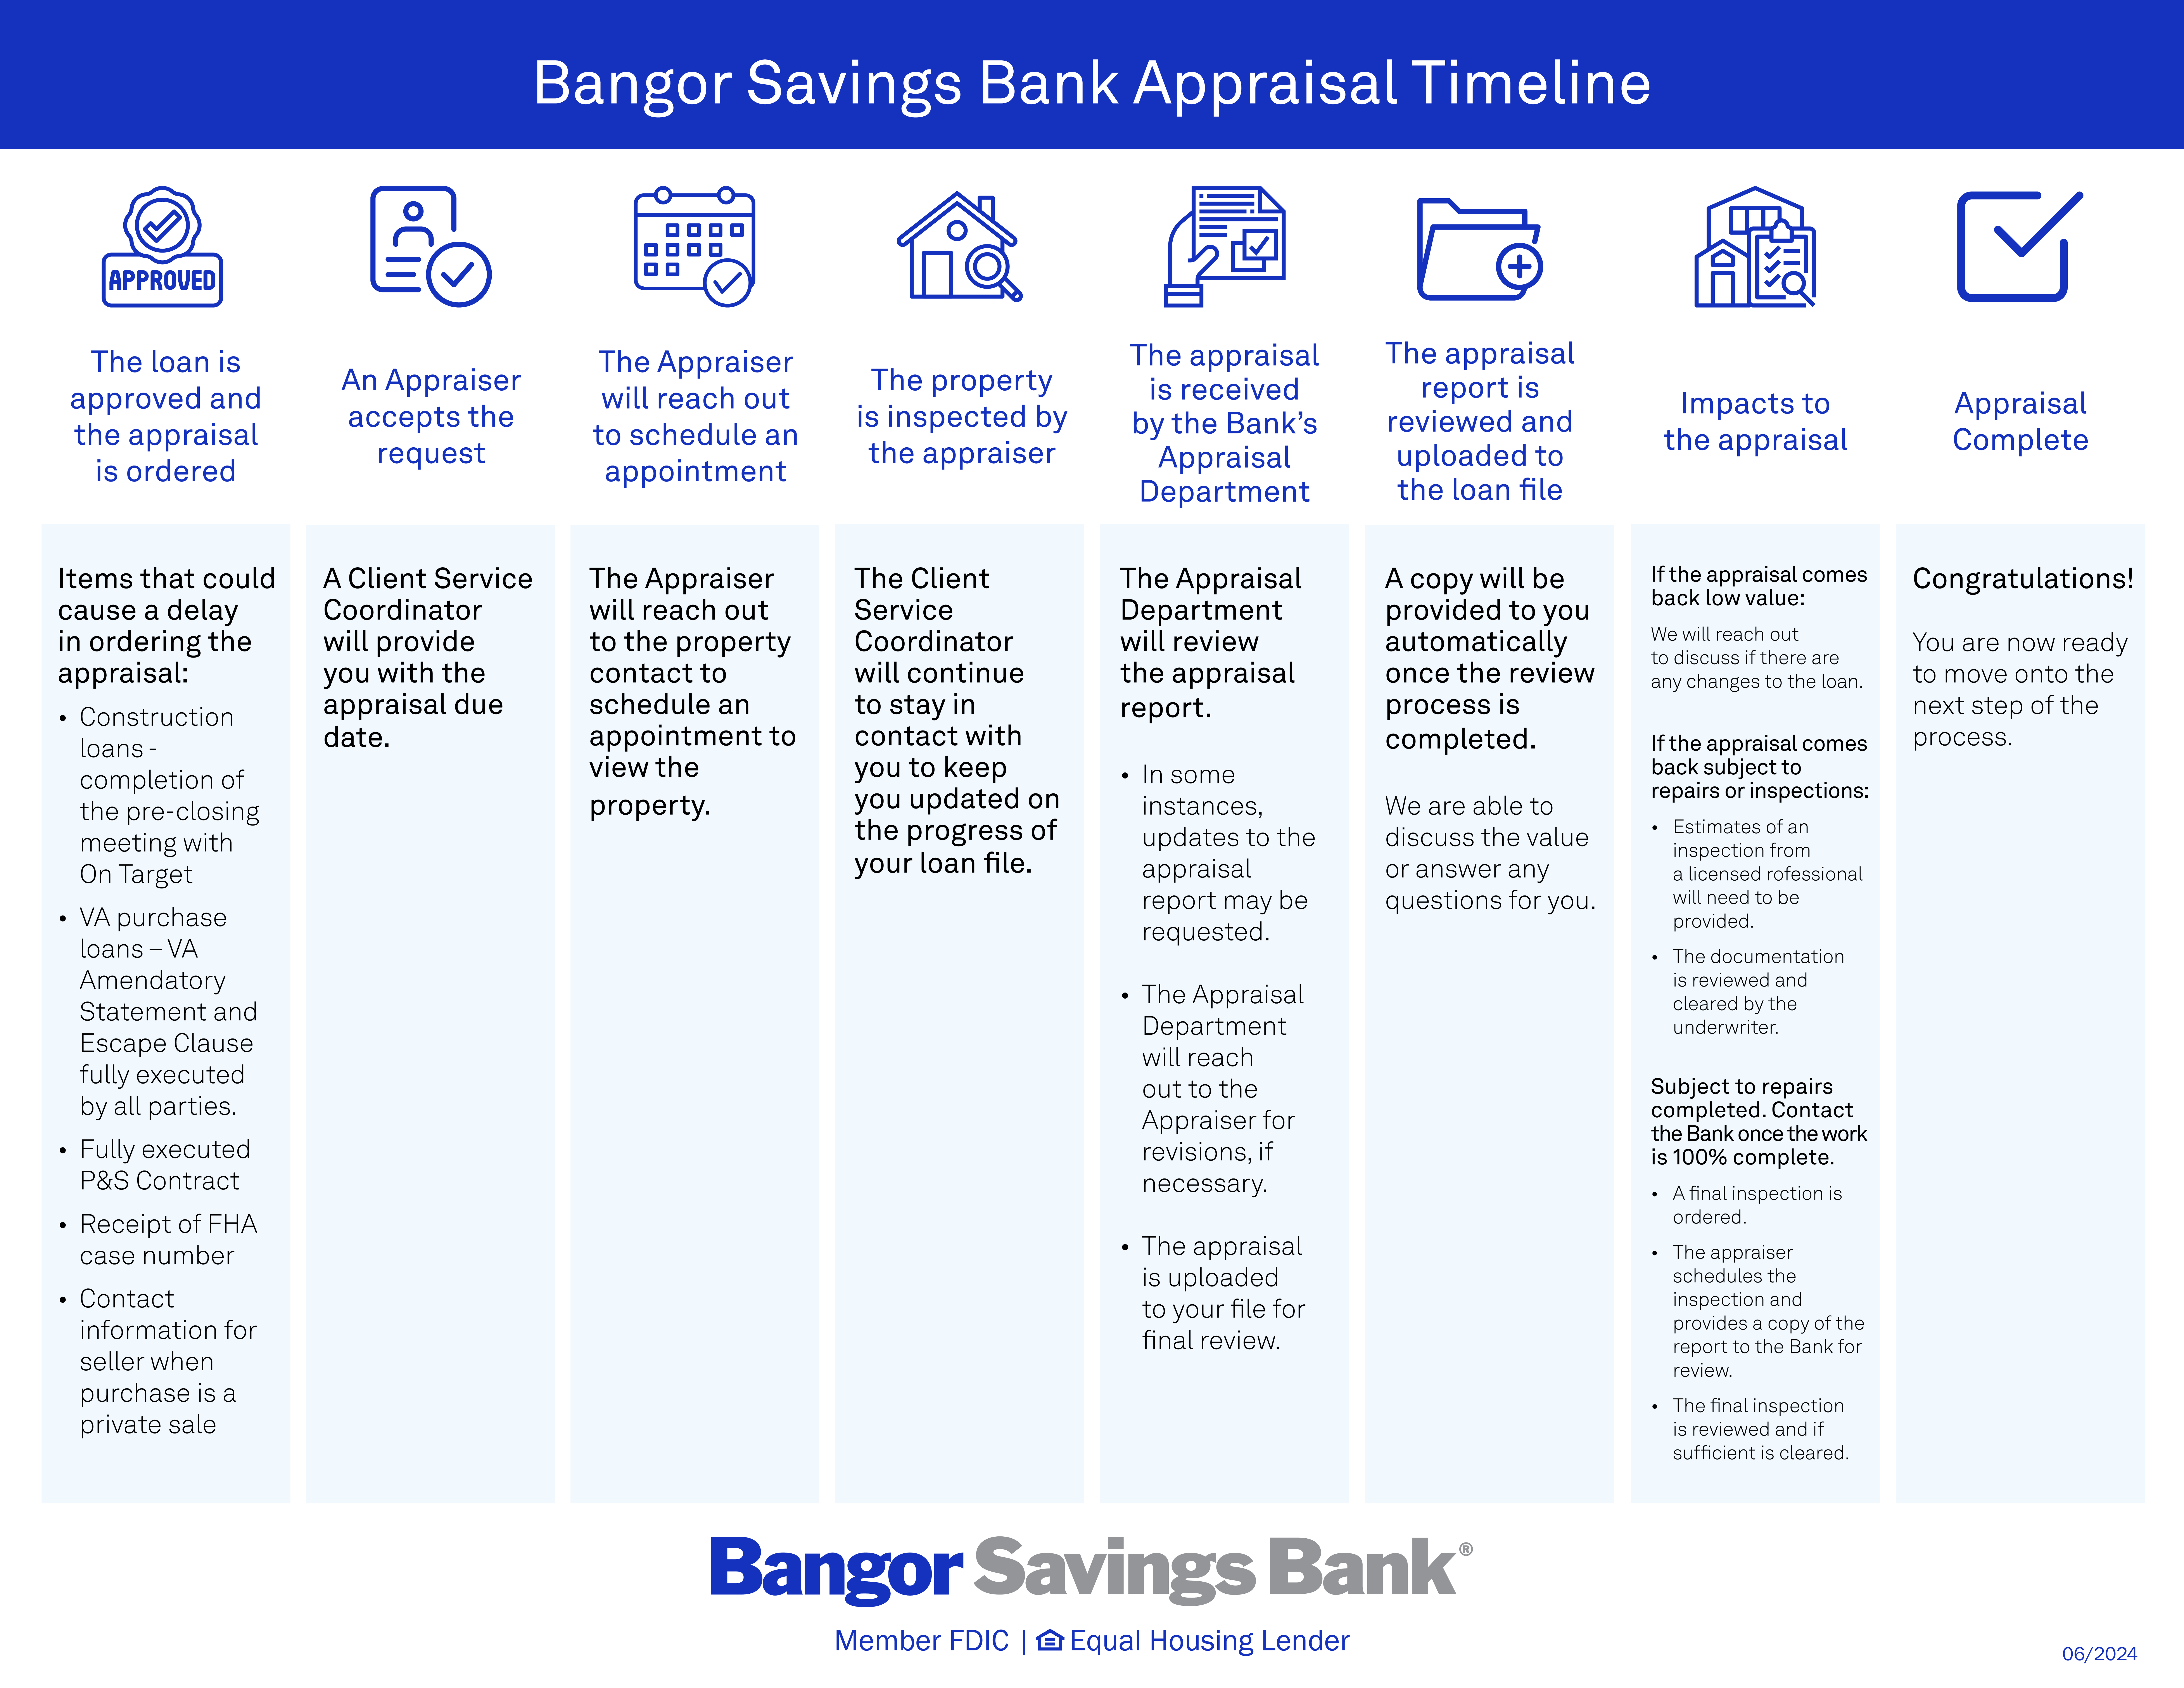 Bangor Savings Bank Appraisal Timeline - use link above for the PDF file